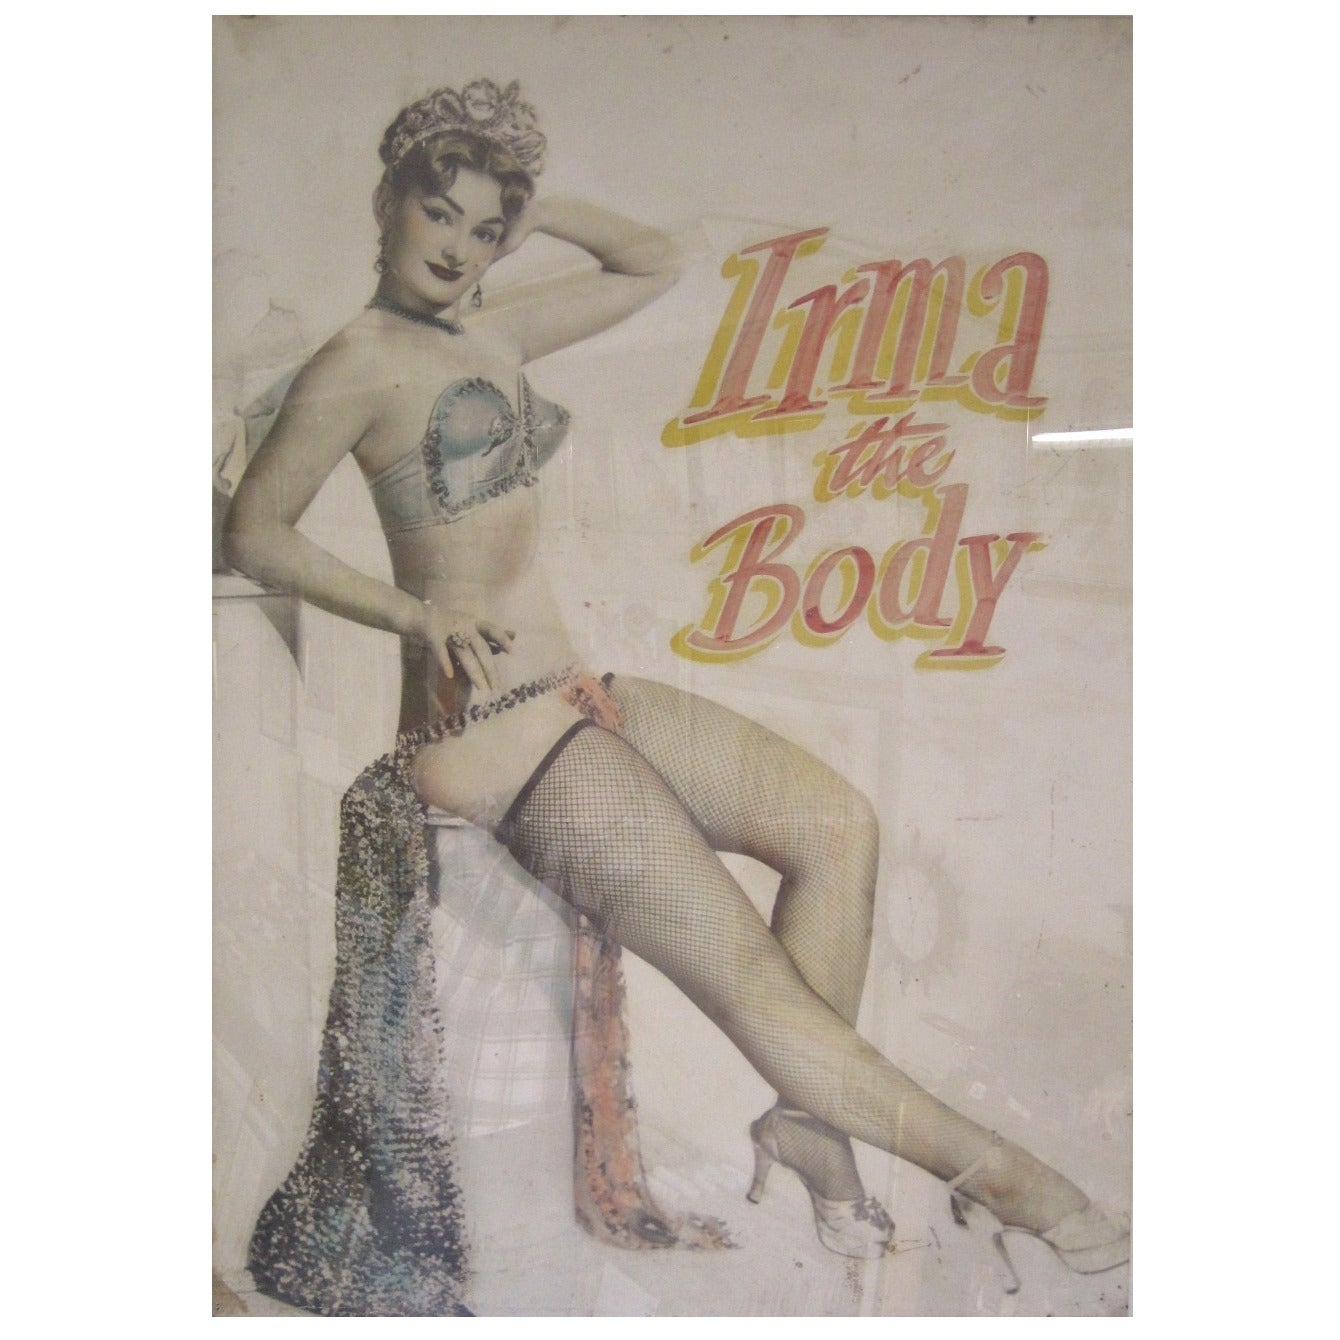 "Irma the Body" Burlesque Performer Poster